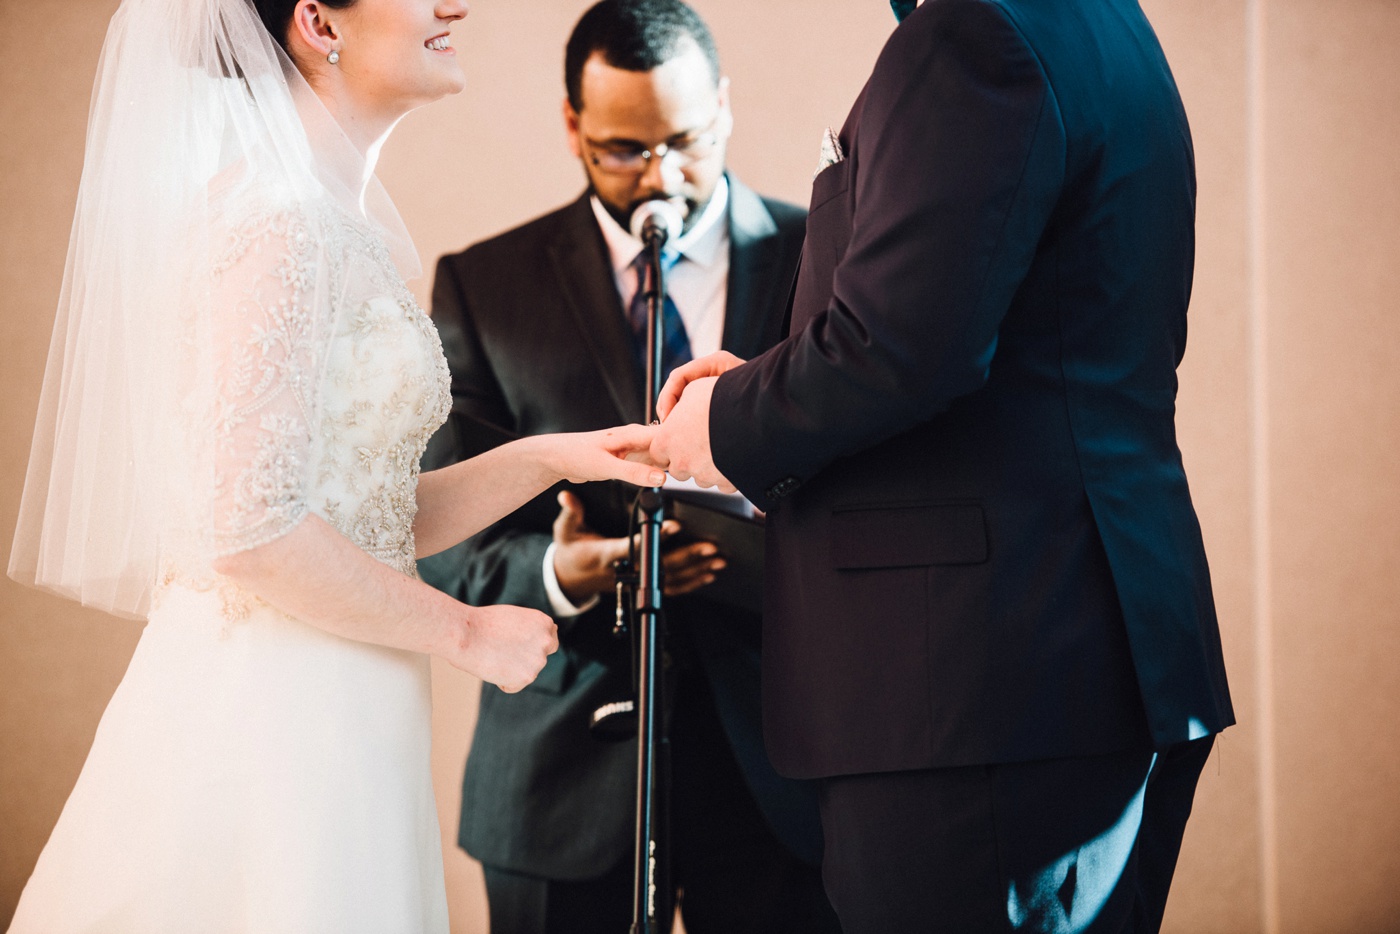 Amy + Jacob - Silver Spring Civic Building Ceremony - Maryland Wedding Photographer - Alison Dunn Photography photo